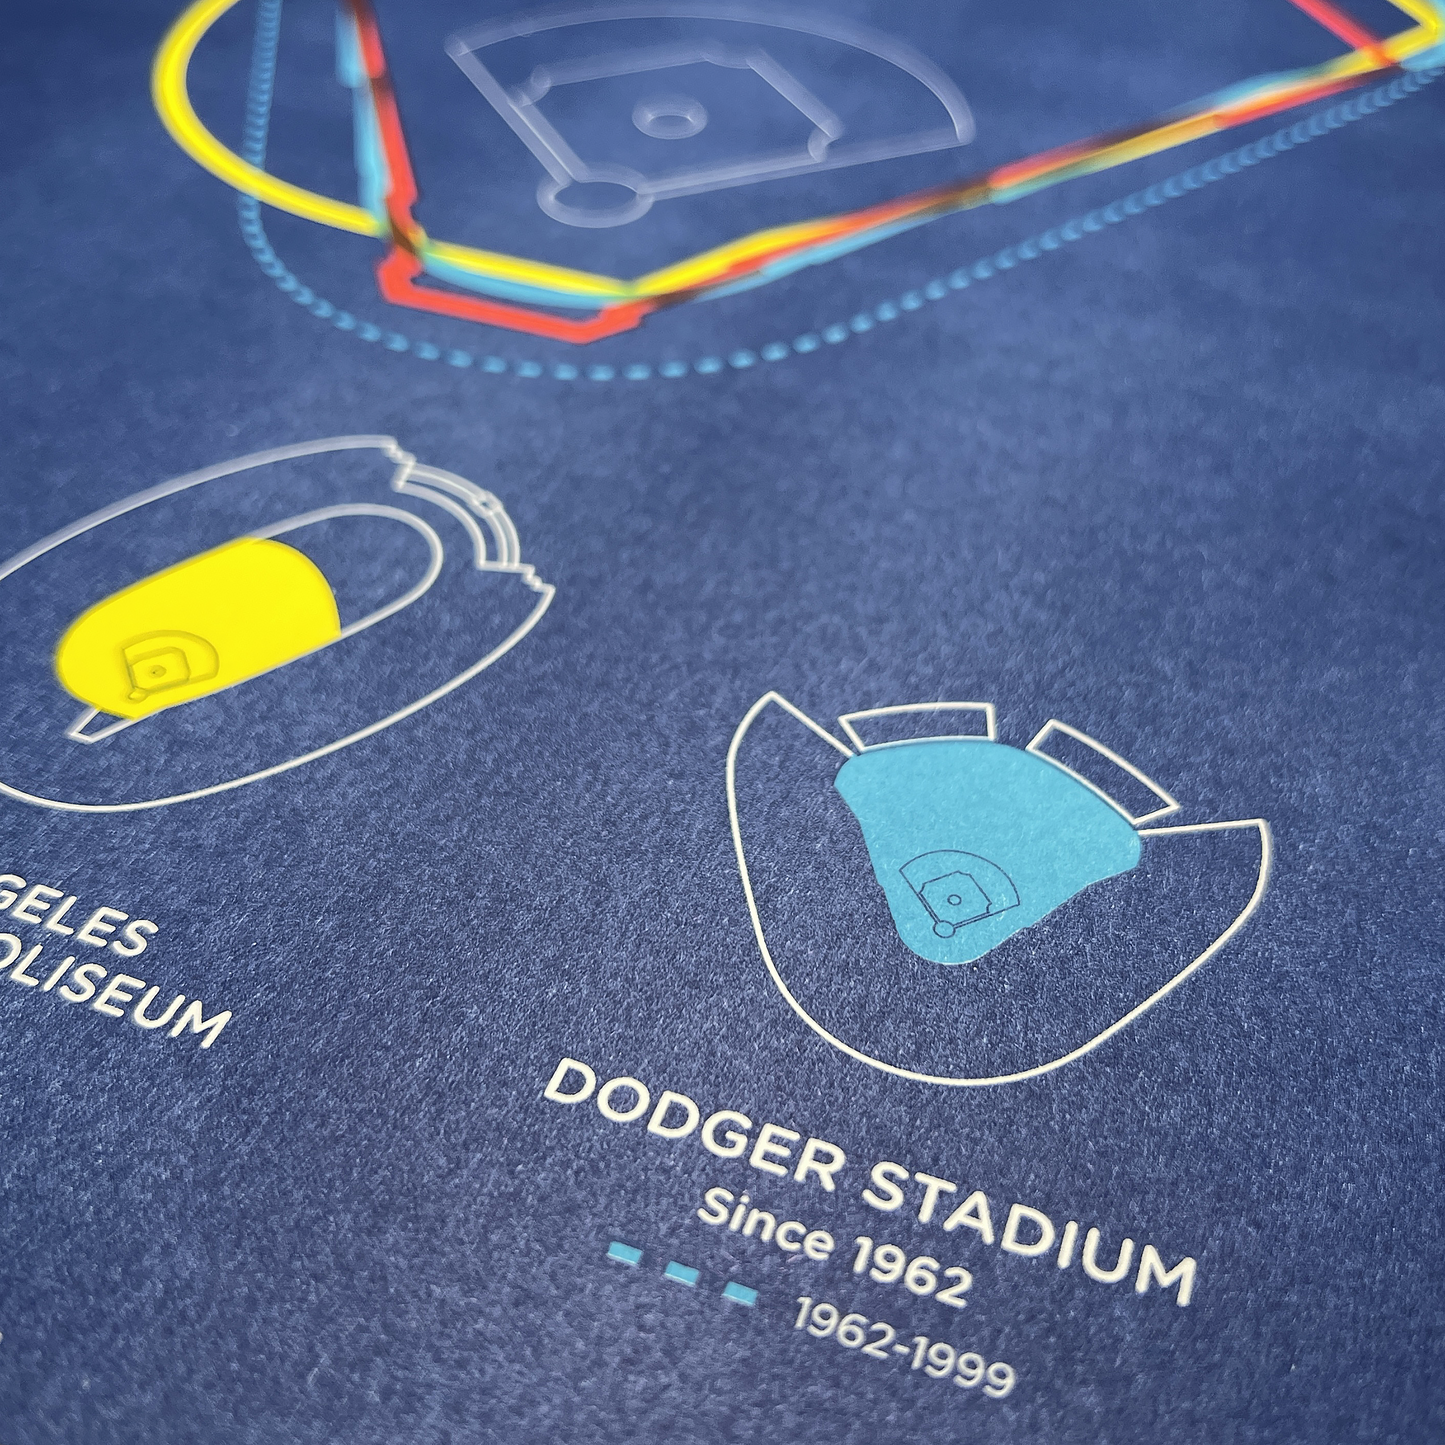 Home of Dodgers Baseball Risograph Print